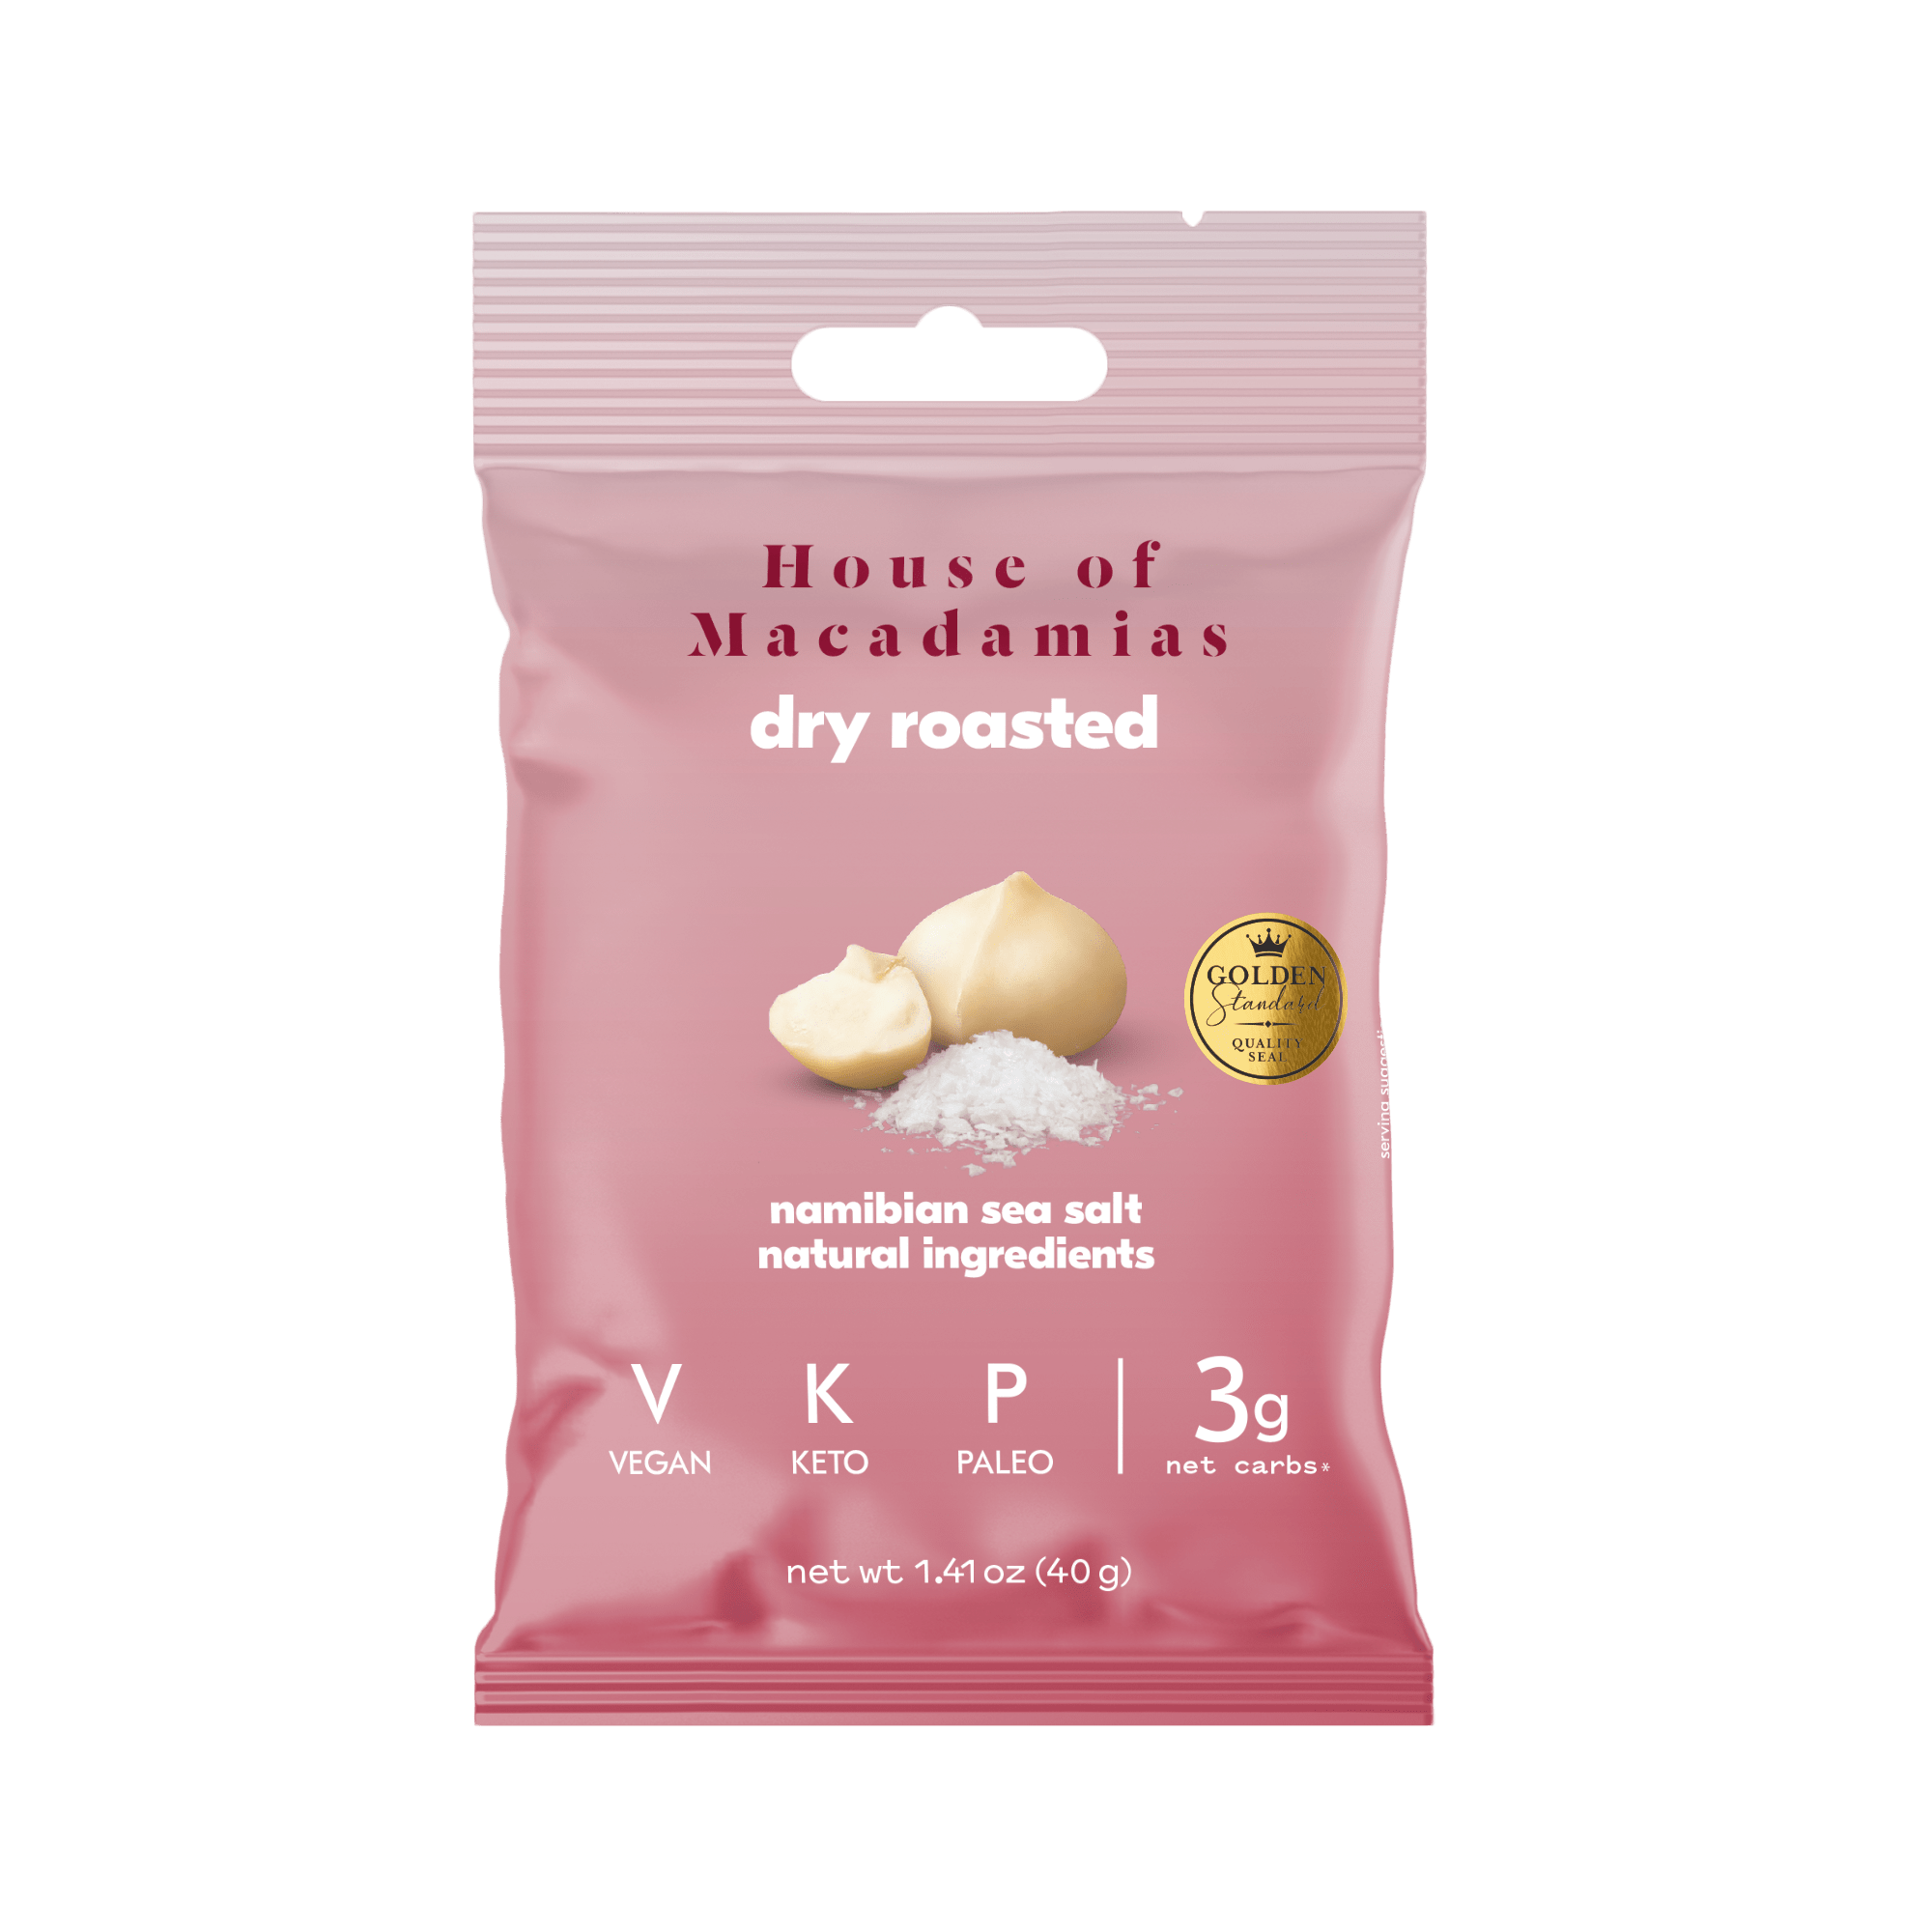 Dry Roasted Macadamia Nuts with Namibian Sea Salt (12 Bags) - House of Macadamias - easy snacks